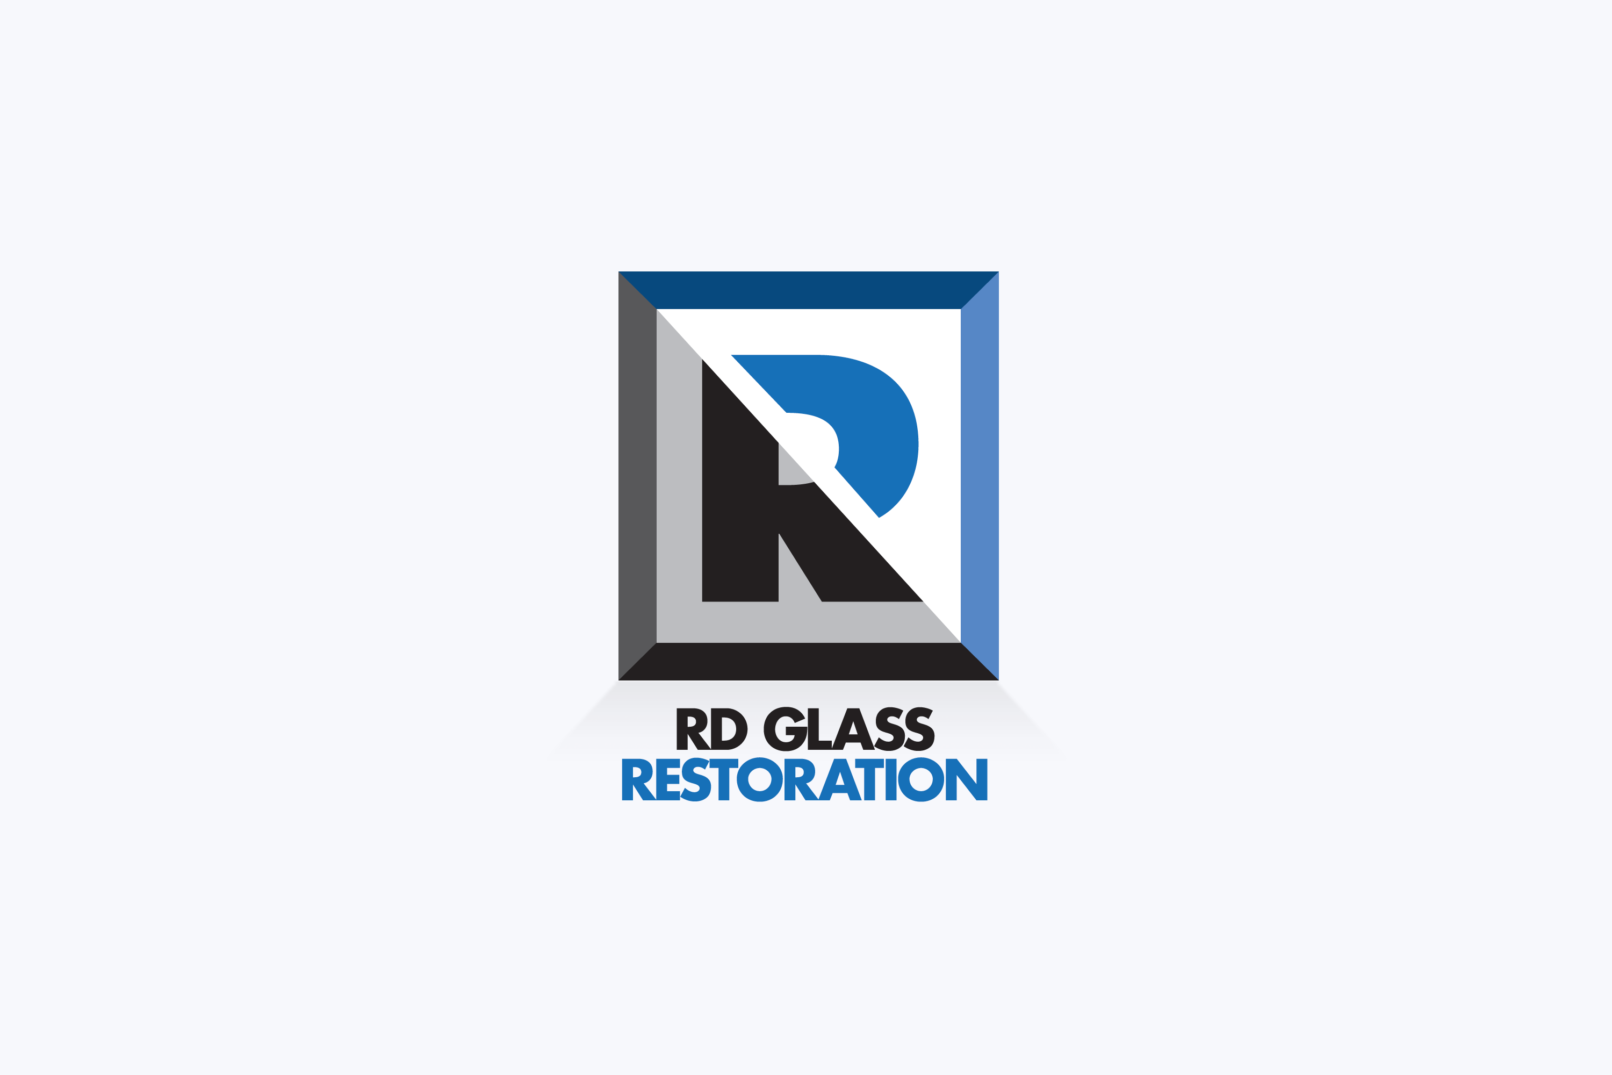 rd glass restoration logo design